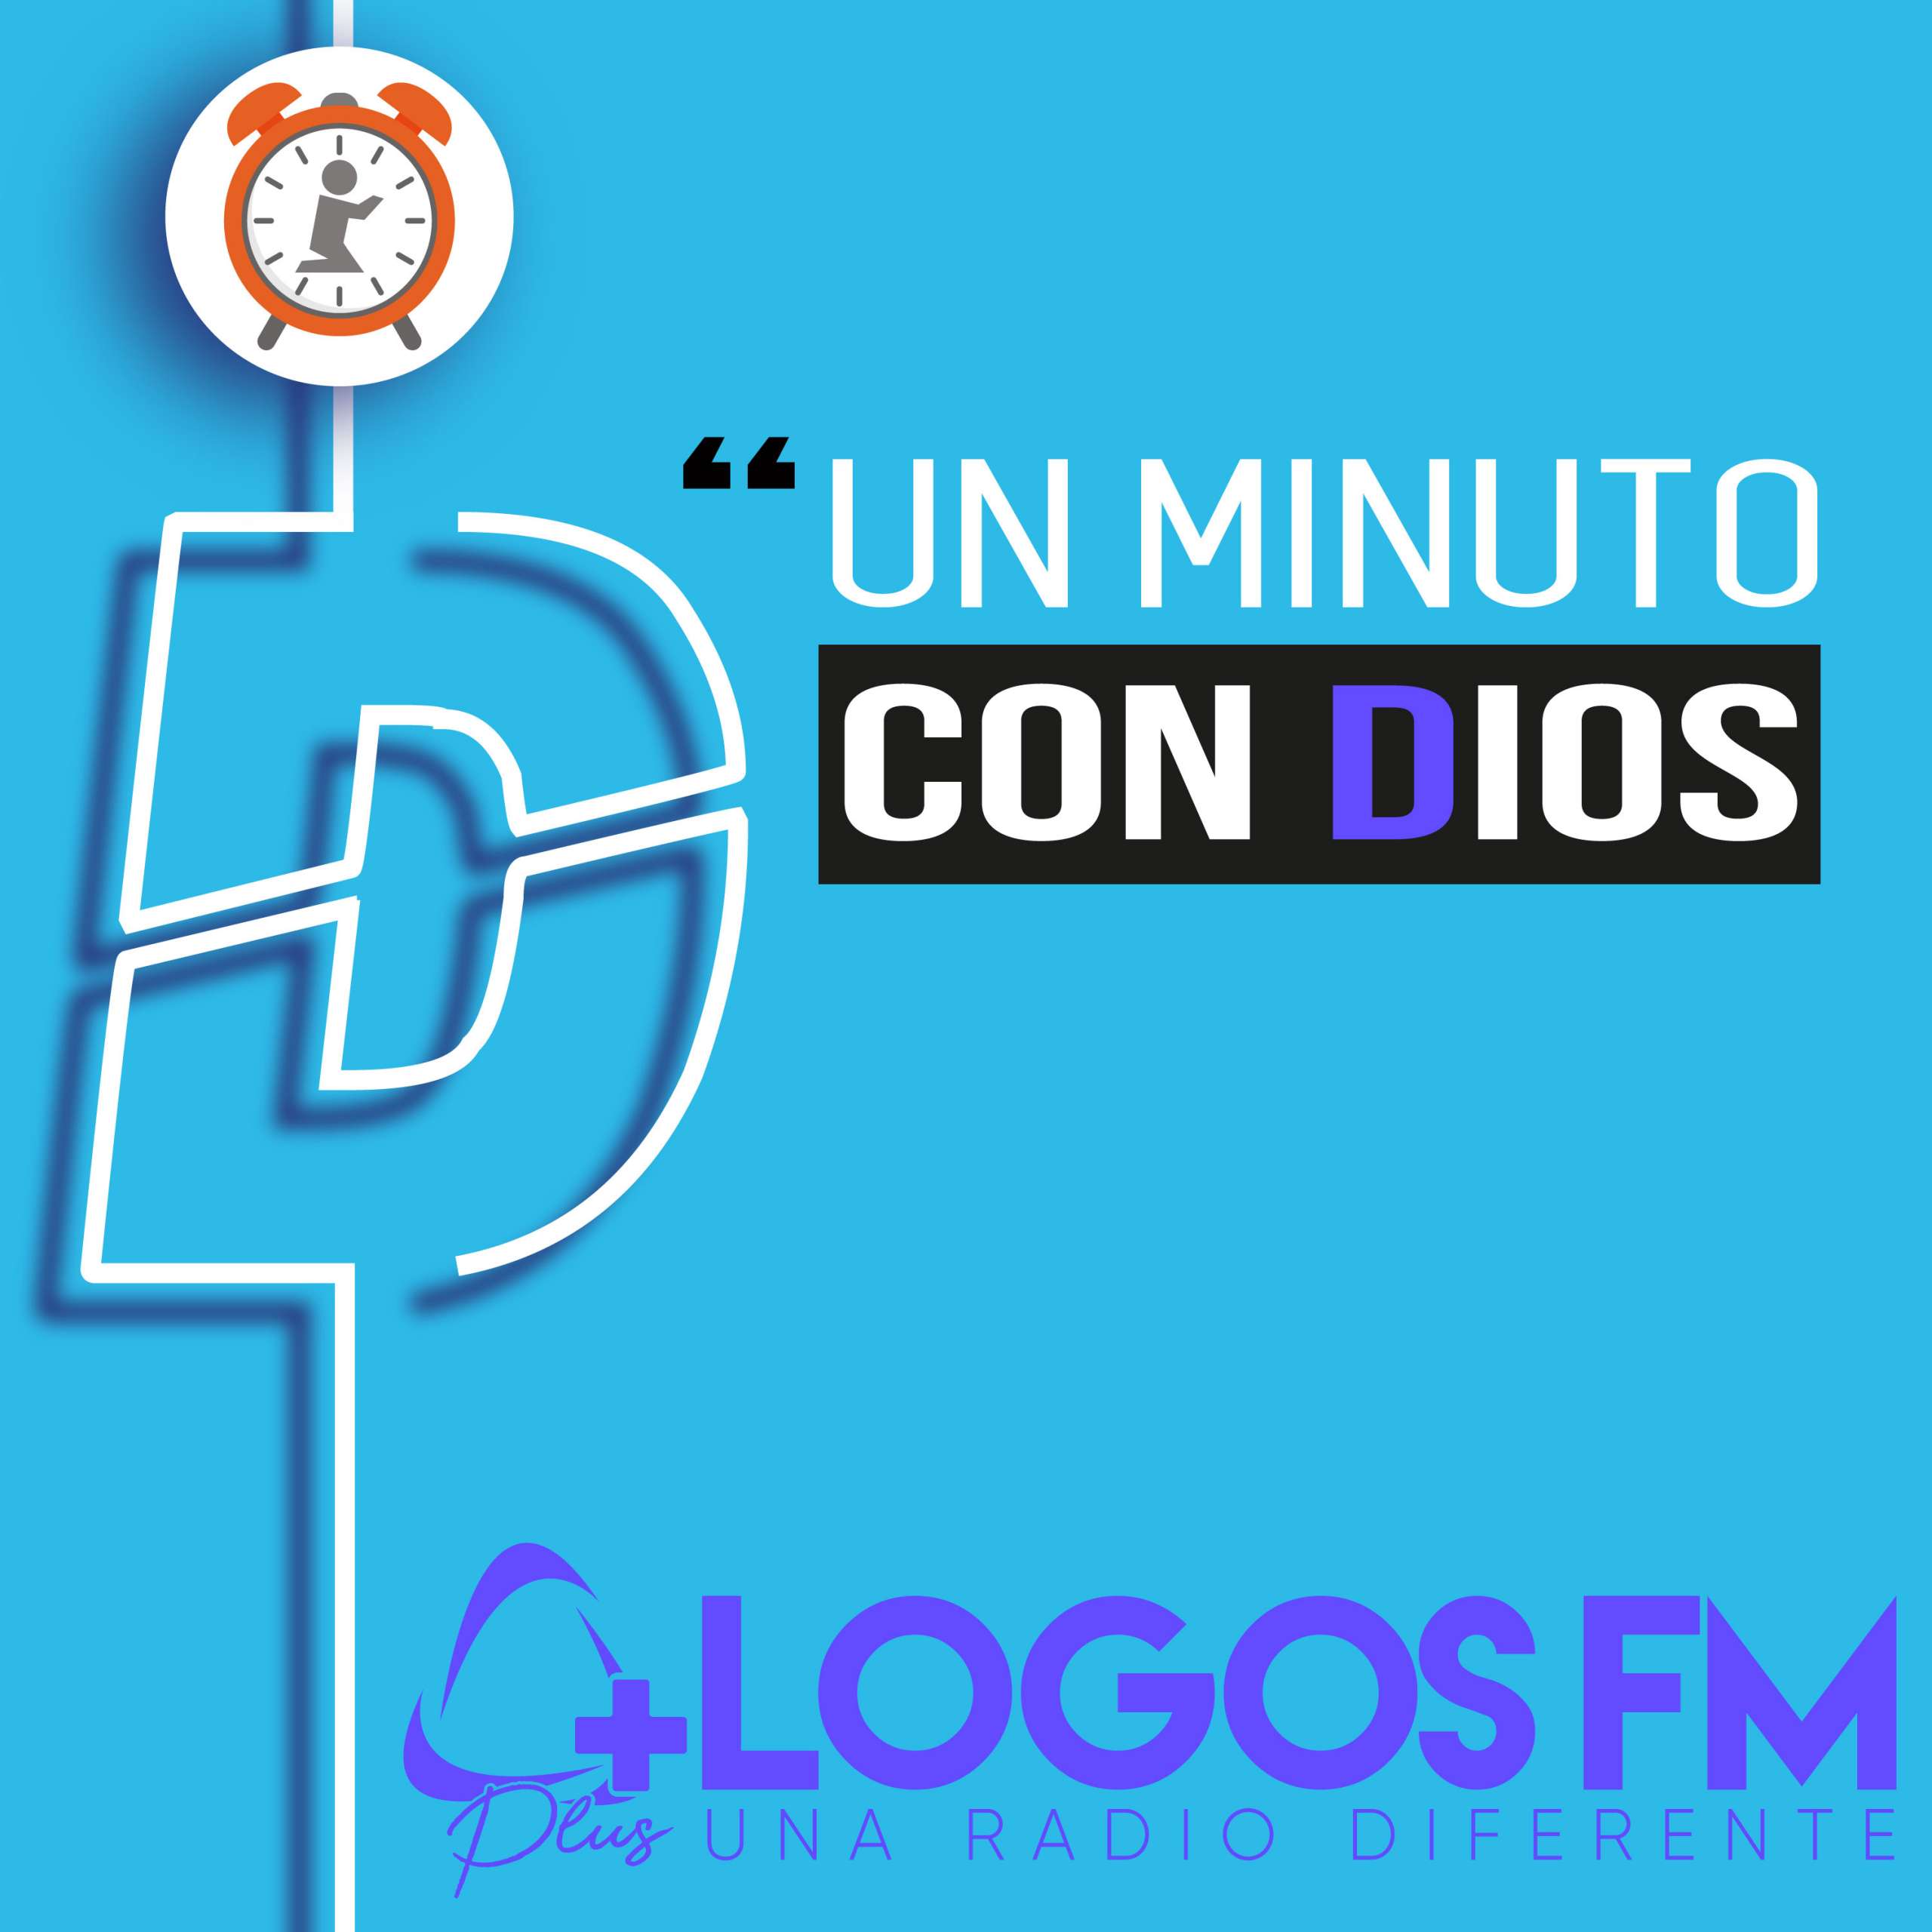 Un minuto con Dios - Episodio 384 - Loida Vargas